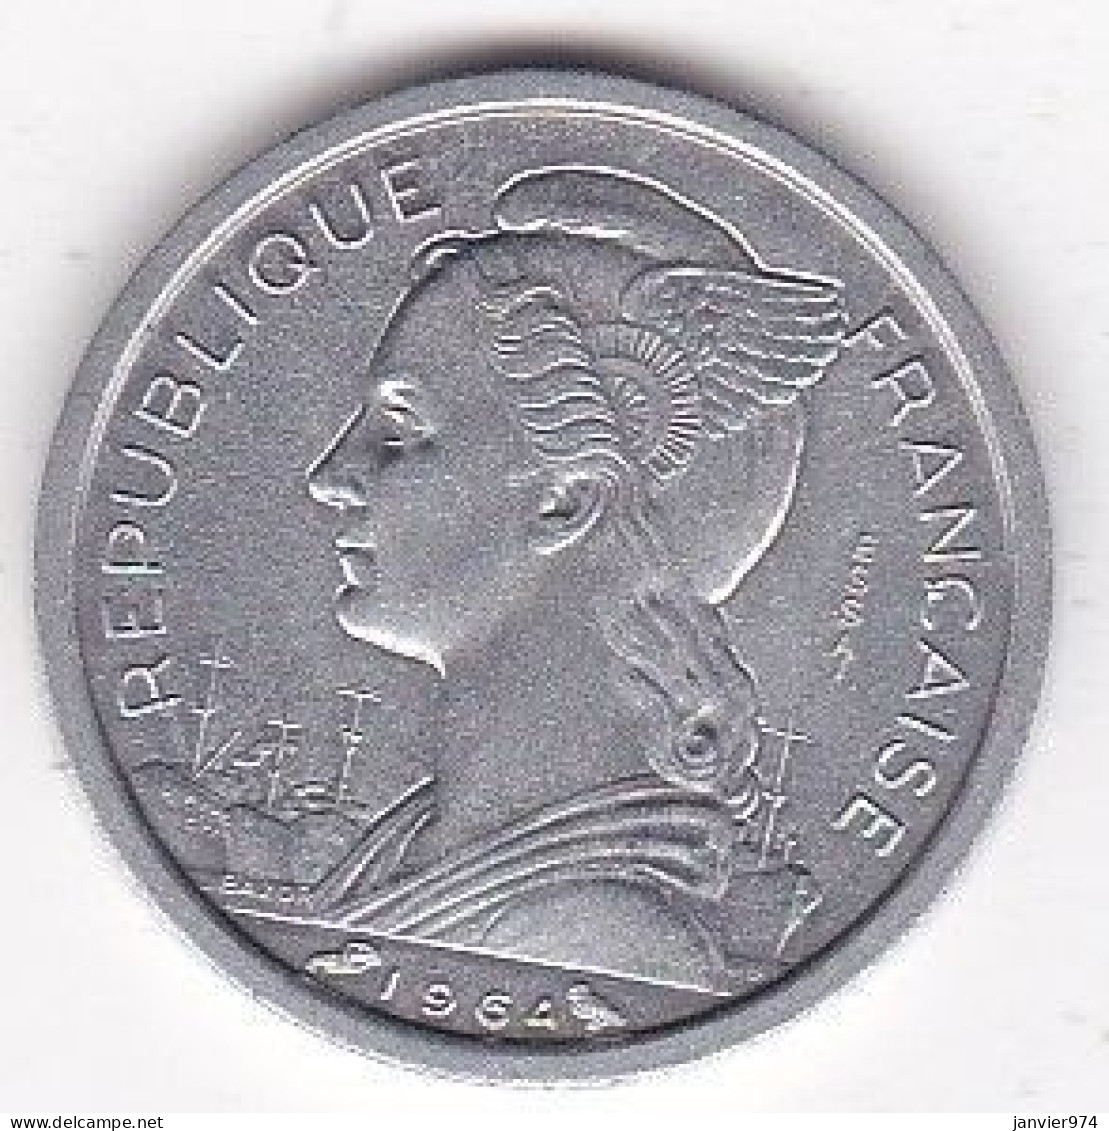 Archipel Des Comores , Republique Française 1 Franc 1964 ESSAI , En Aluminium LEC# 32, UNC - Komoren